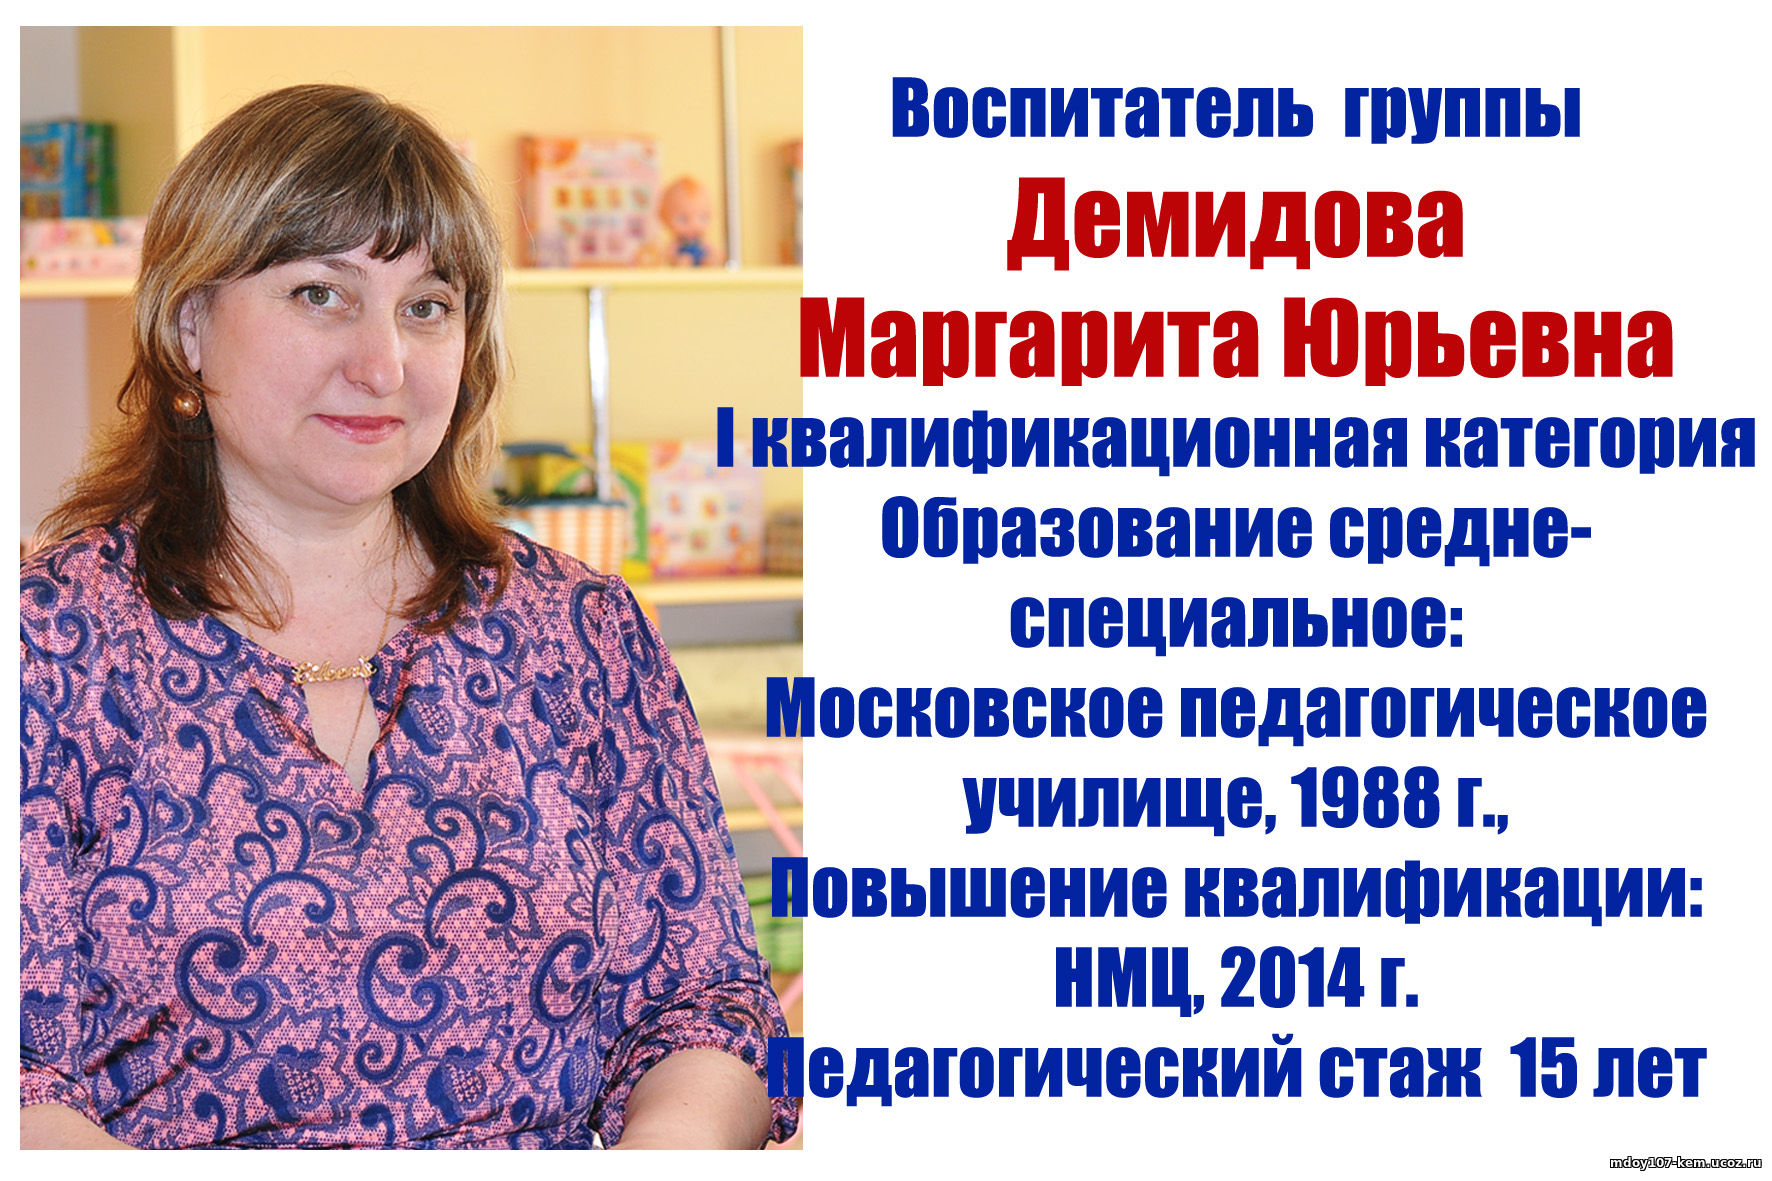 Демидова Маргарита Юрьевна